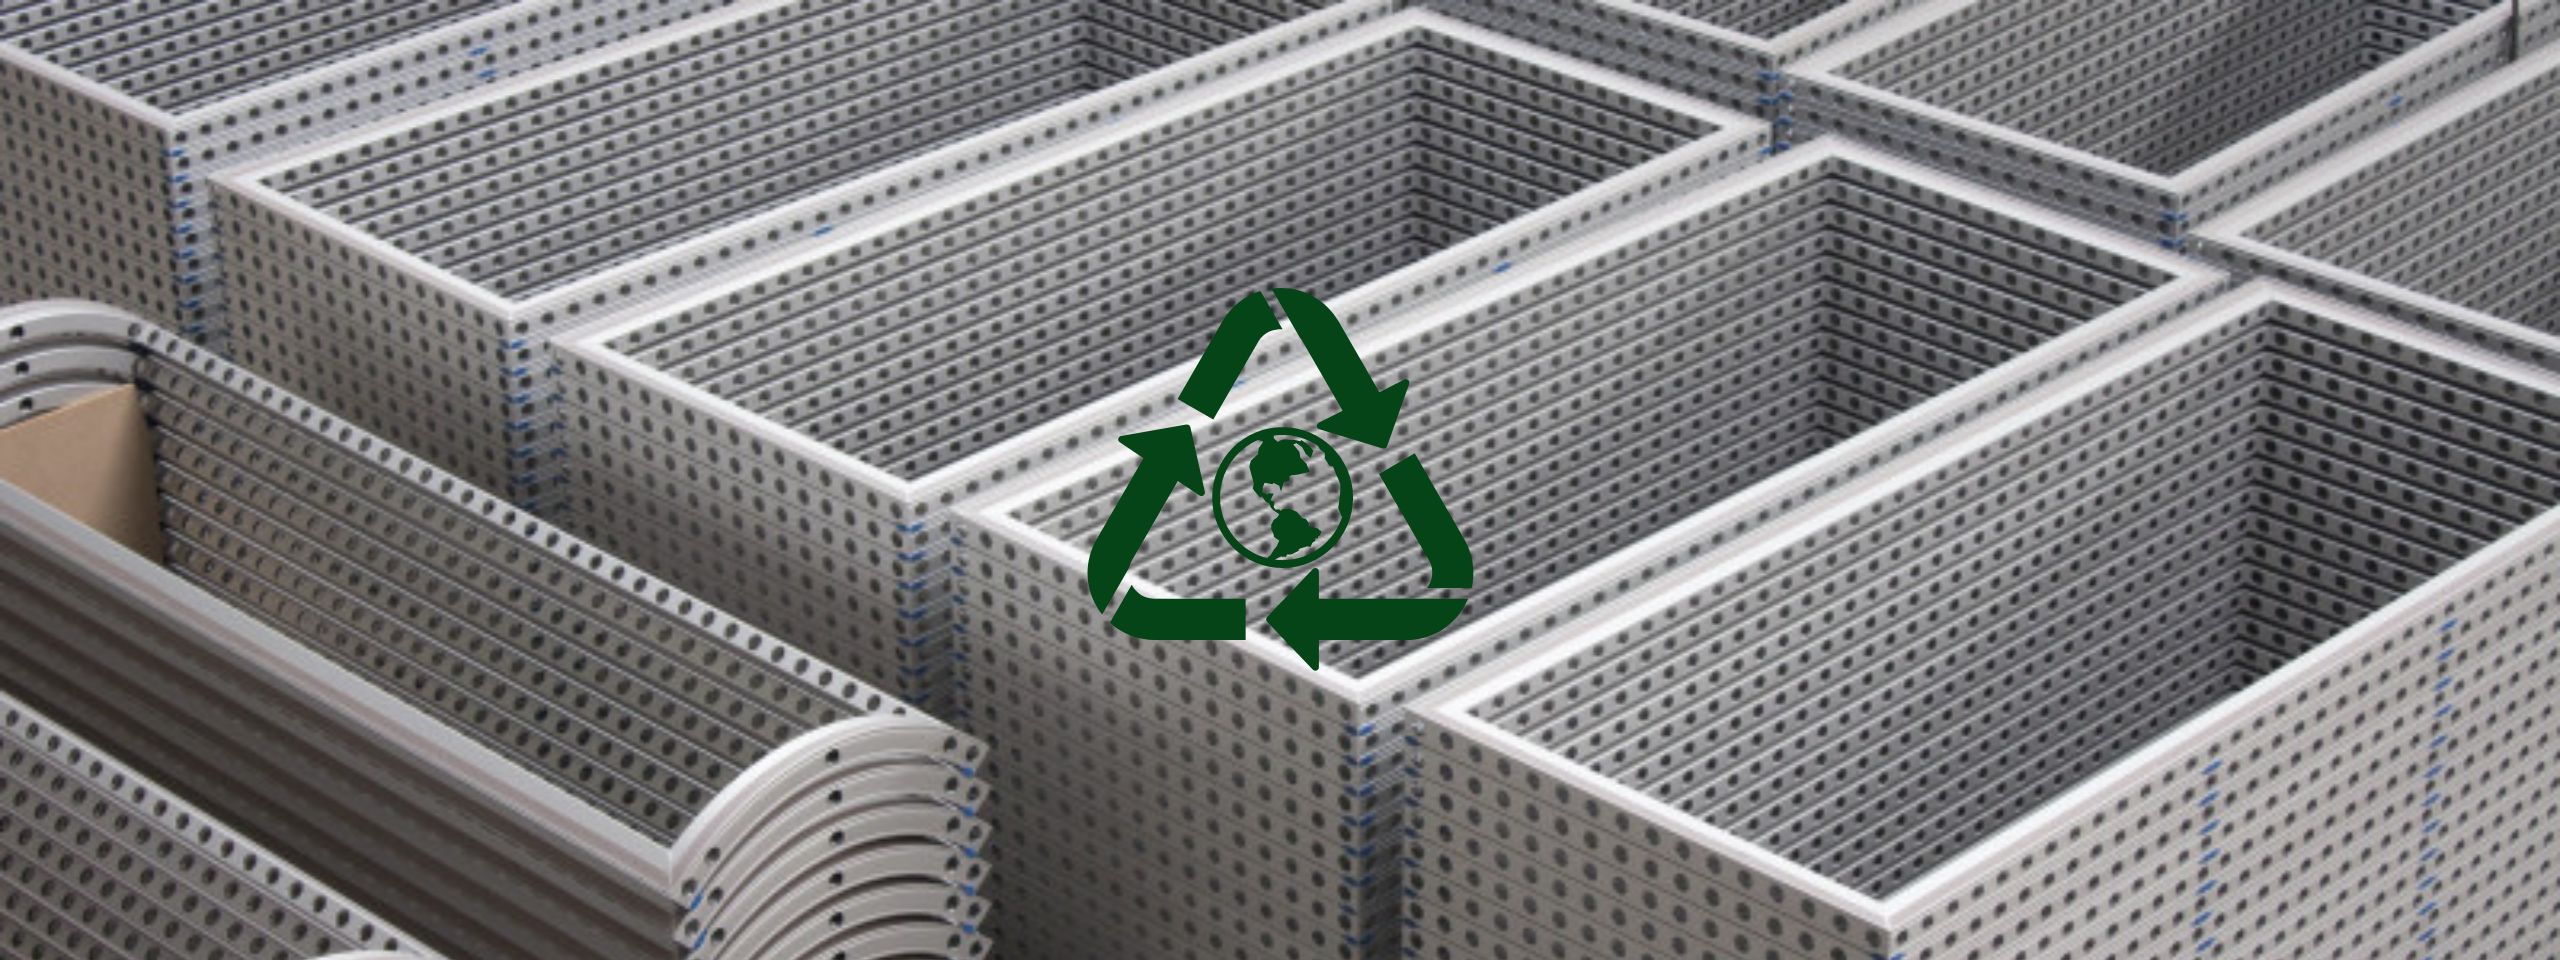 Reduce Reuse Recycle with custom modular hardware